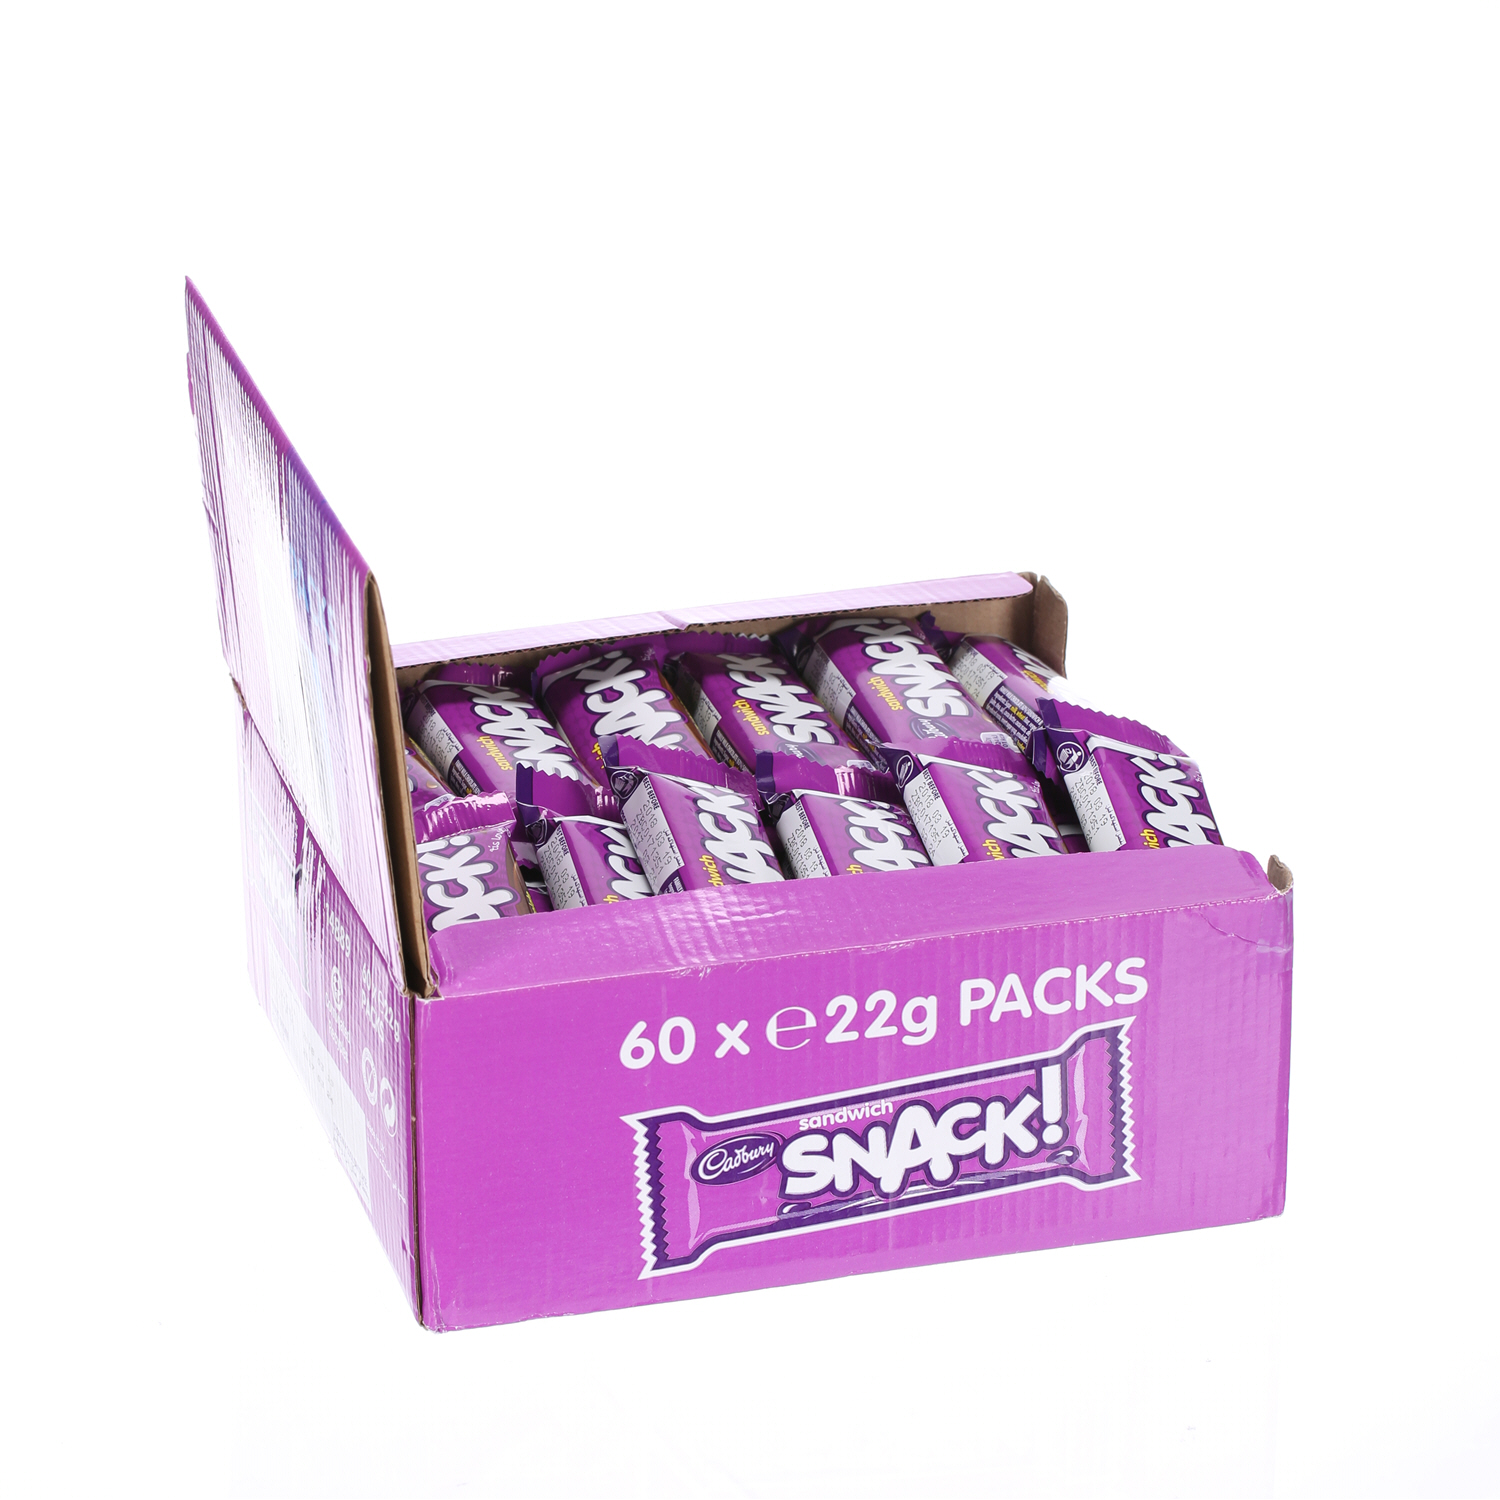 Cadbury Snack Sandwich 22 g × 60 Pieces